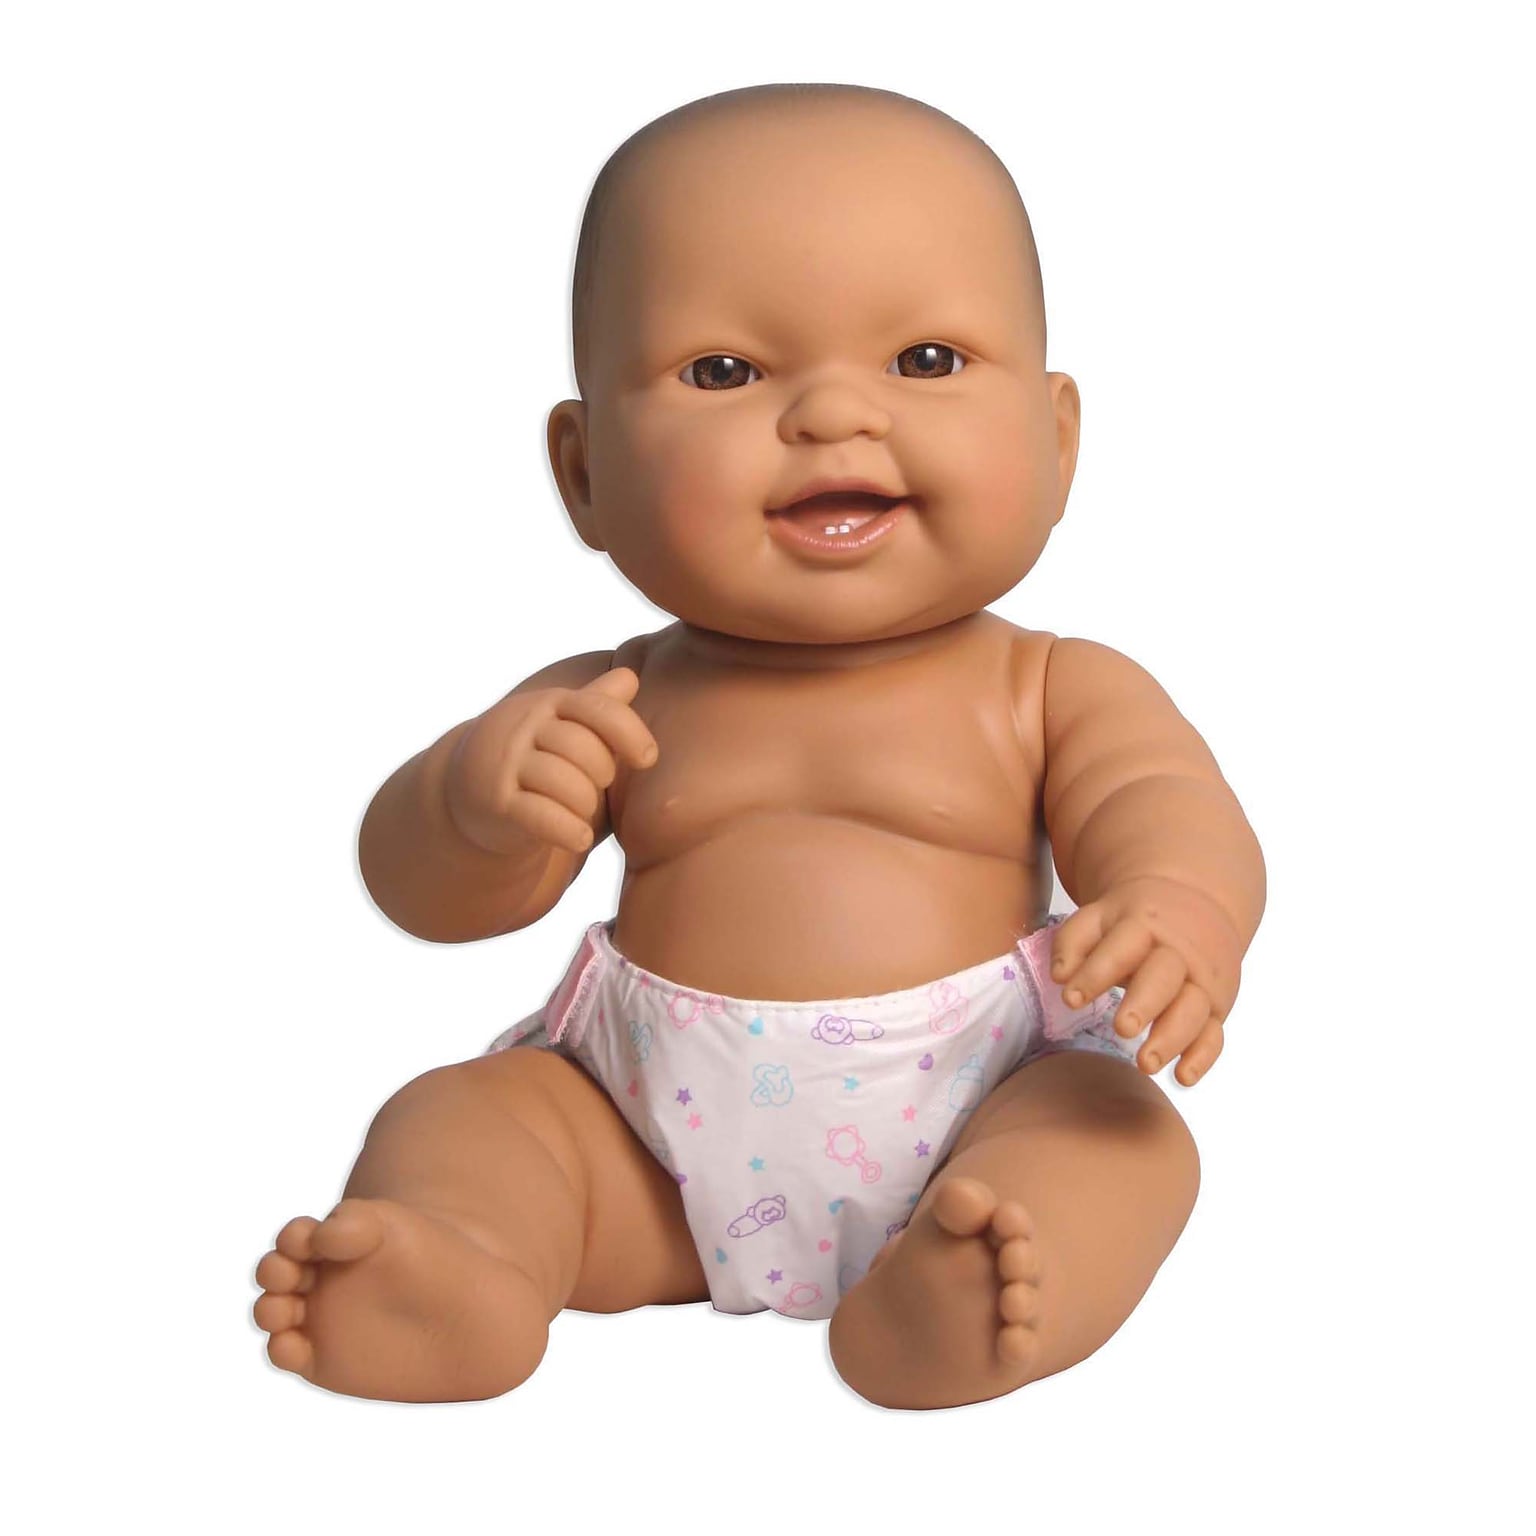 Jc Toys Group® Vinyl 14 Lots to Love® Baby Doll, Hispanic Baby (BER16103)